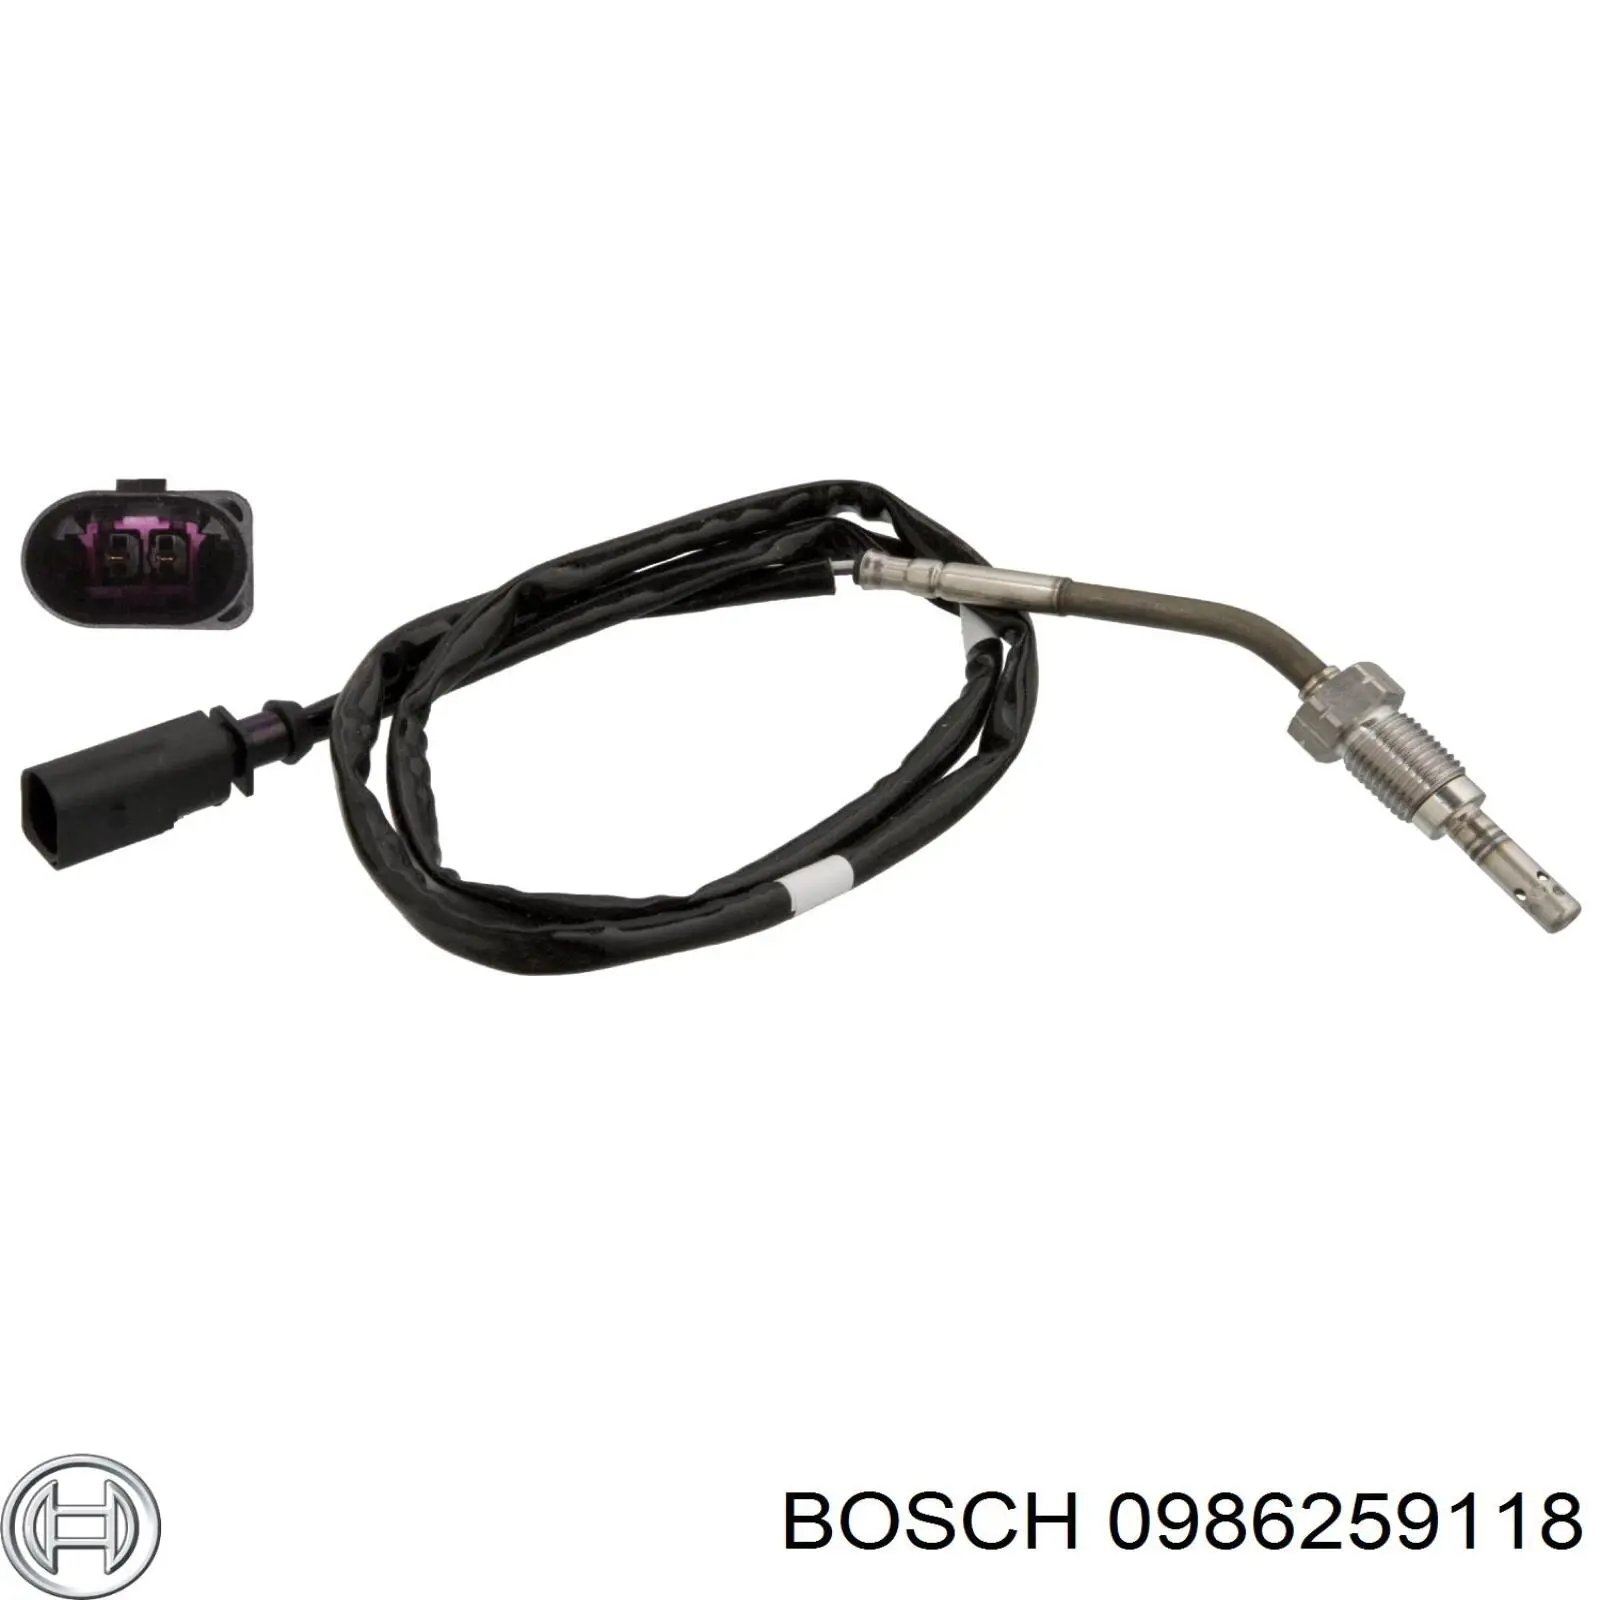 0986259118 Bosch sensor de temperatura dos gases de escape (ge, antes de turbina)